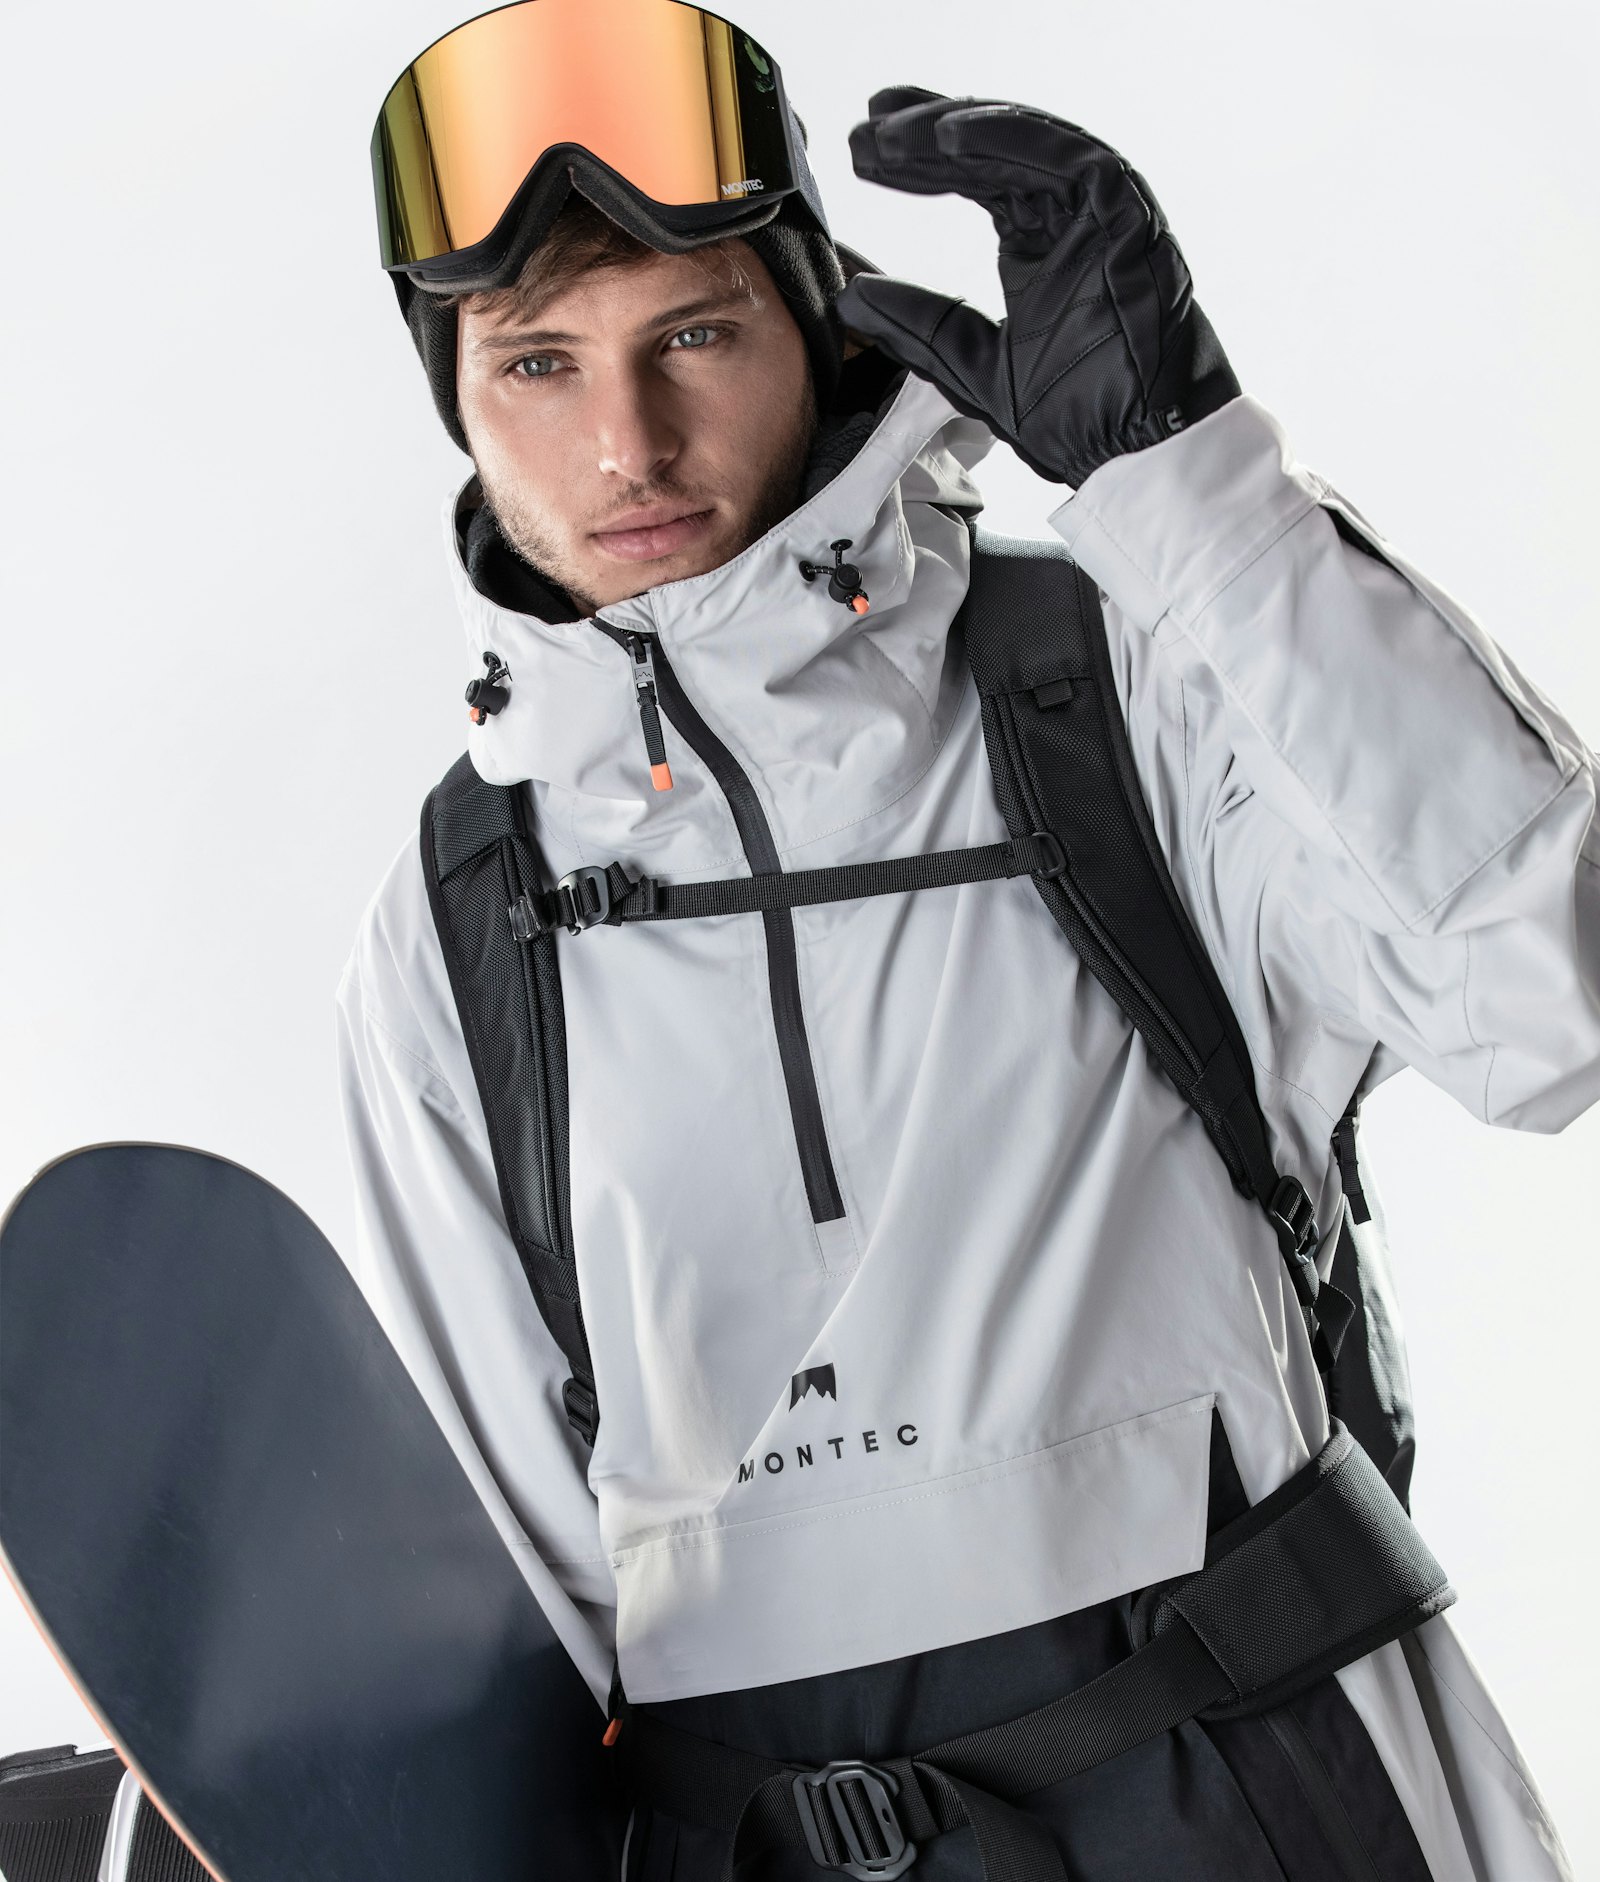 Typhoon 2020 Snowboard jas Heren Light Grey/Black